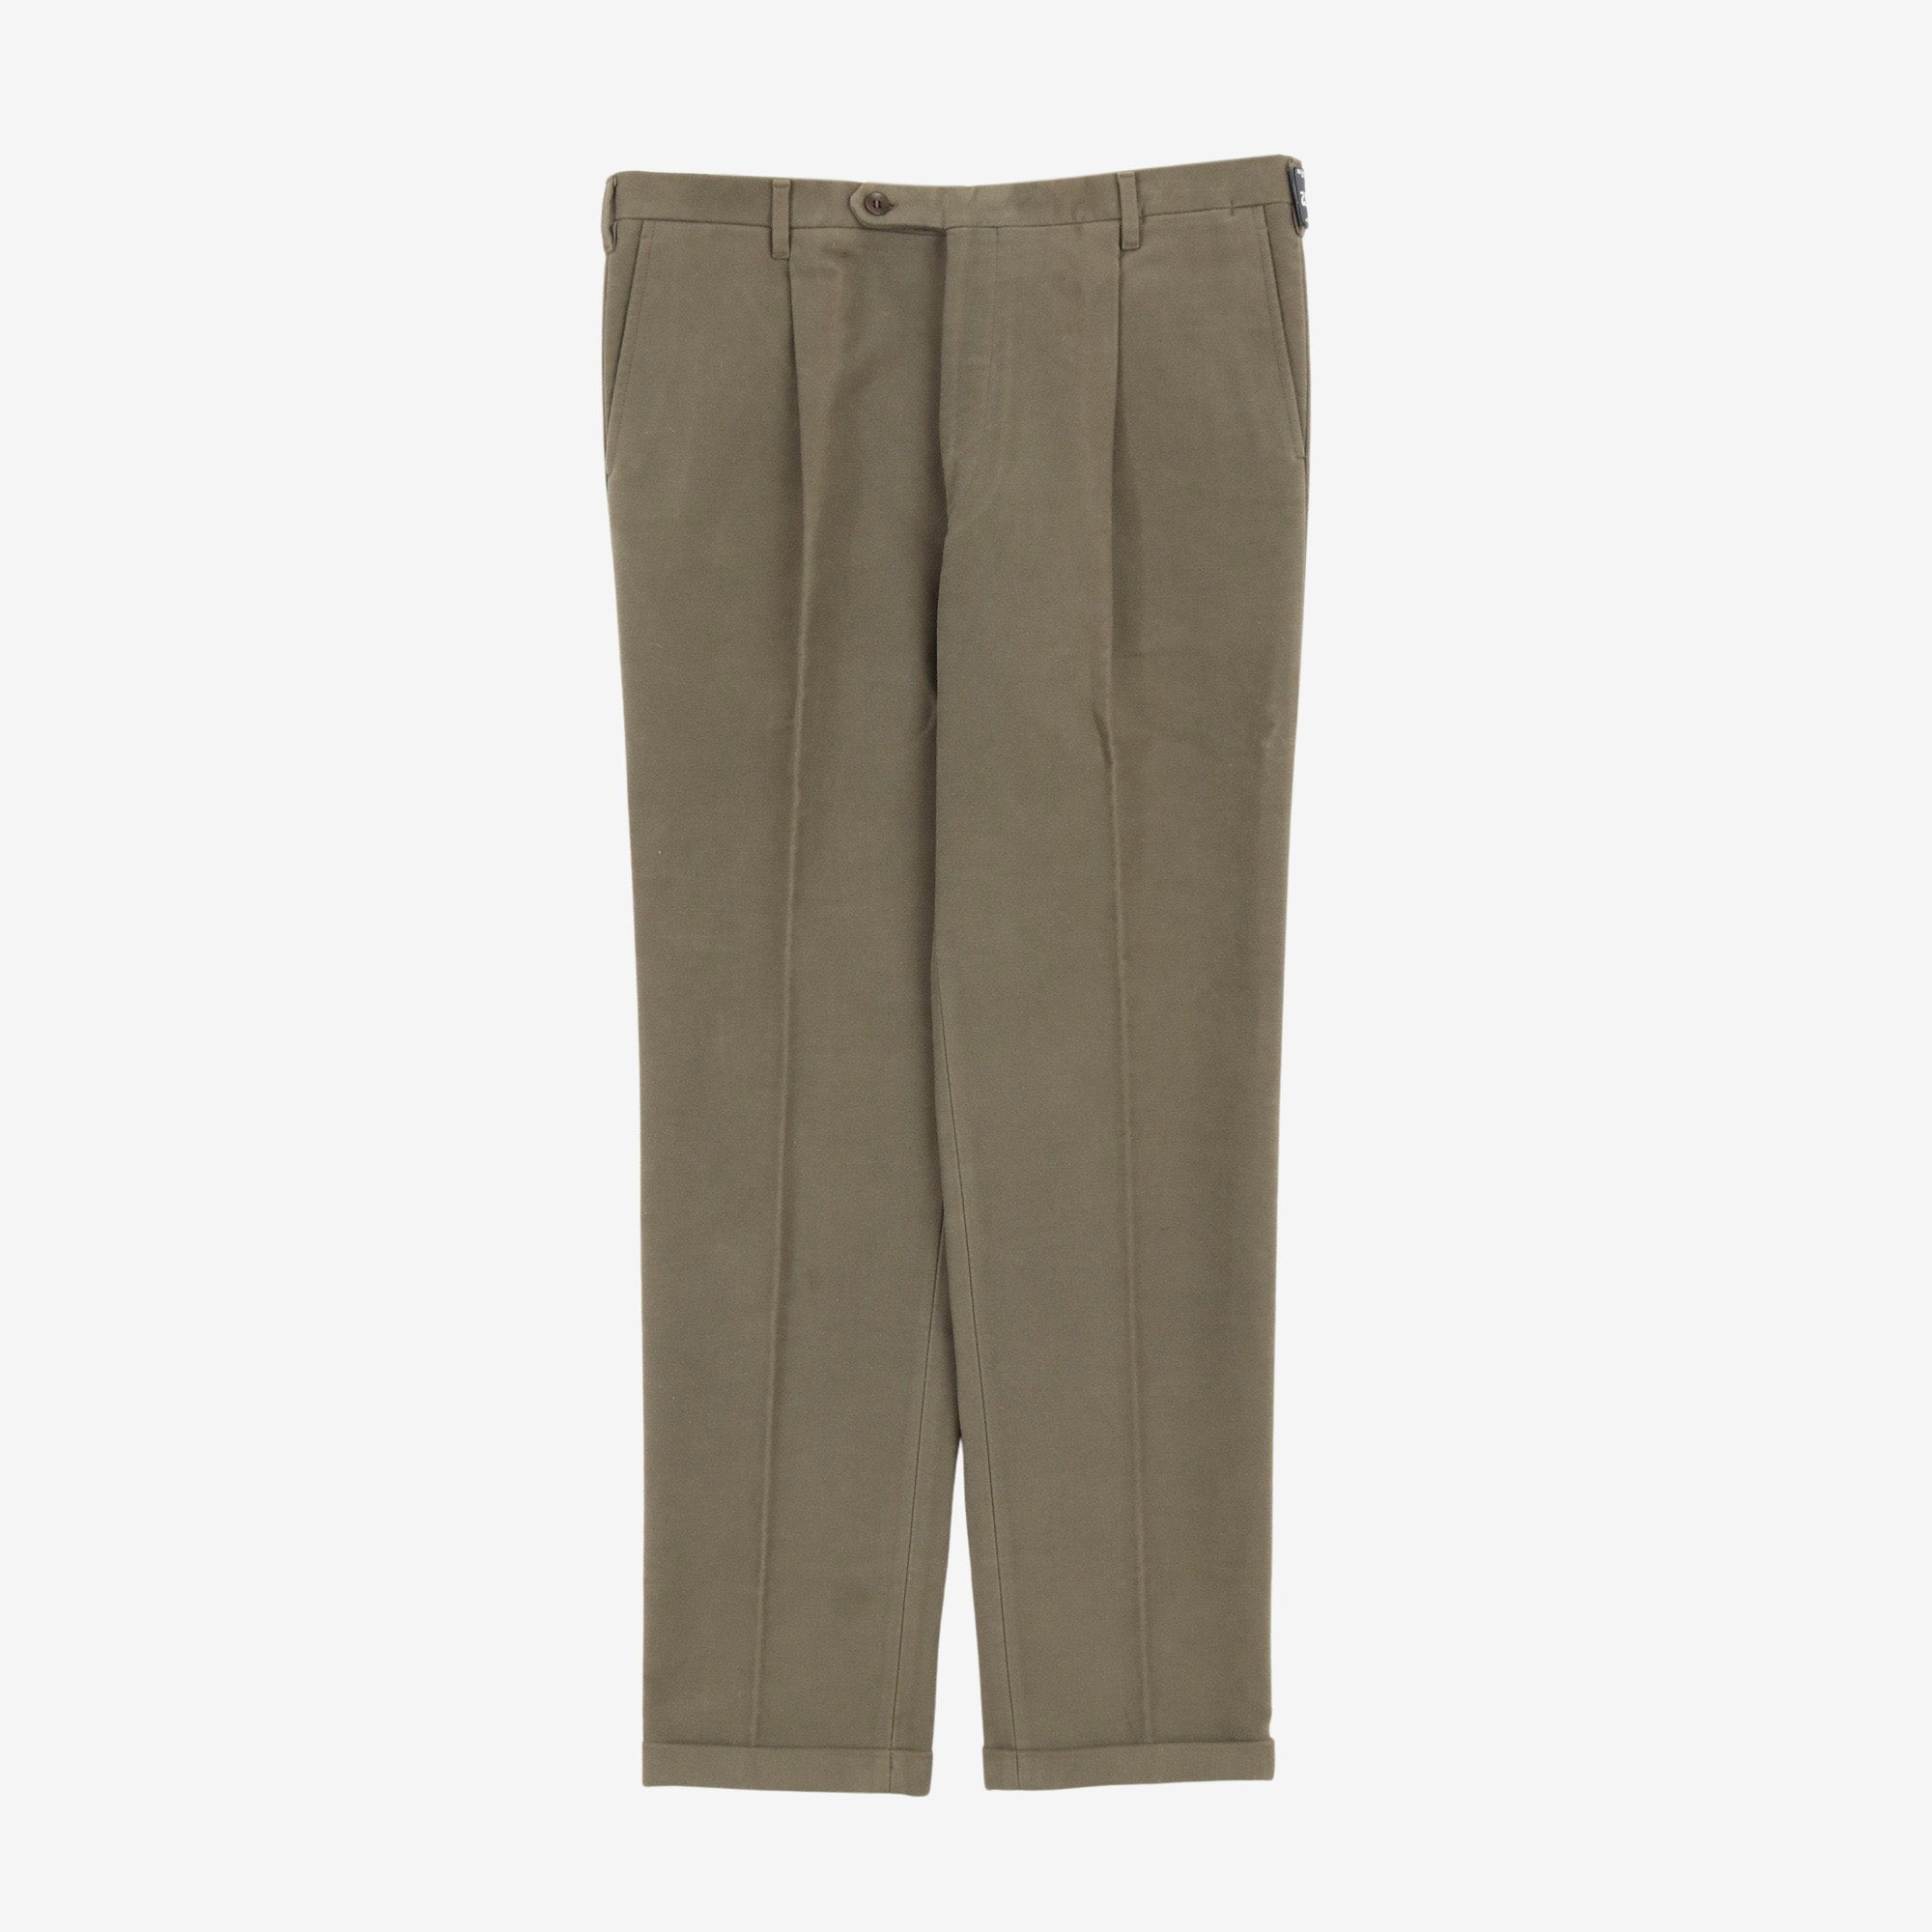 Single Pleat Trousers (37W x 31L)